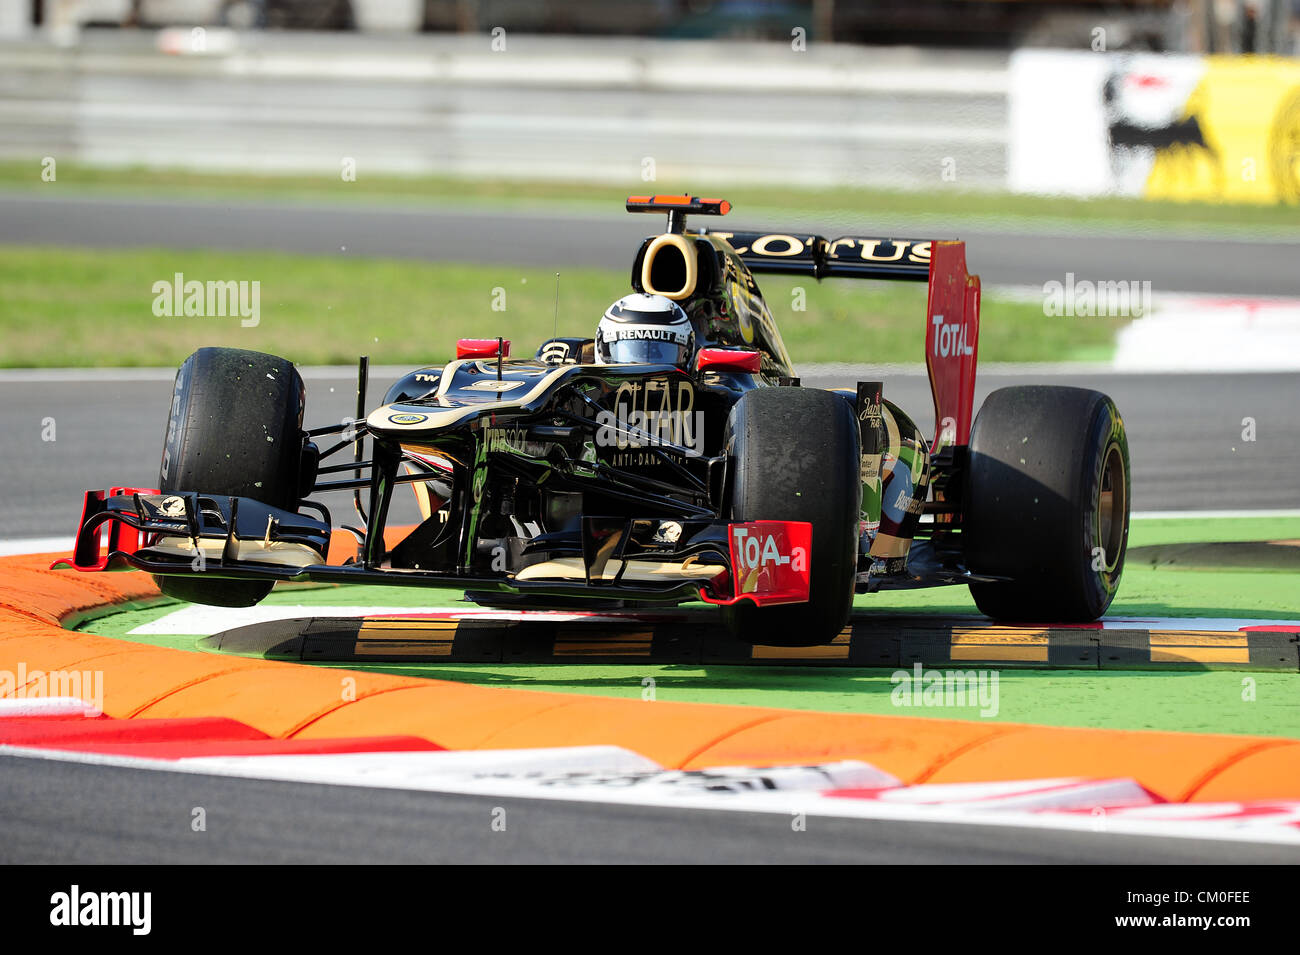 Monza, Italien. 8. September 2012. Kimi Räikkönen von Lotus in Aktion tagsüber Qualifikation GP von Italien 2012. Stockfoto